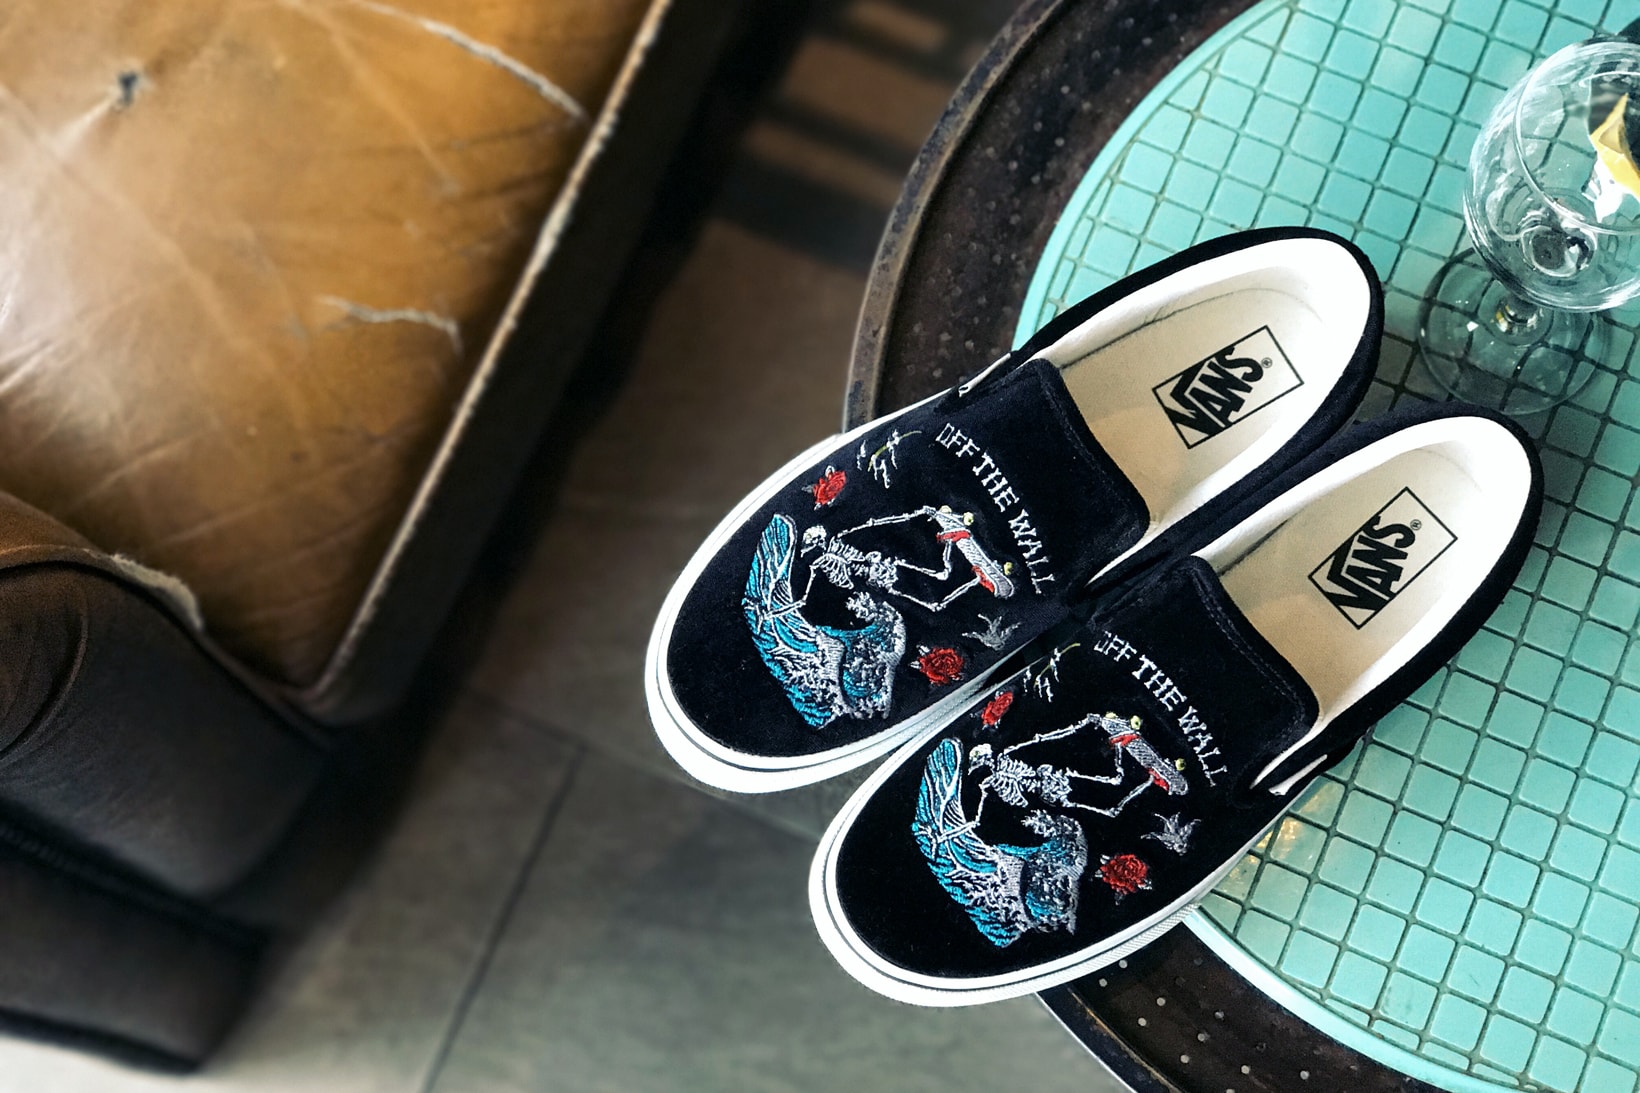 Vans Taiwan Slip-On Sneakers Shoes Footwear Yokosuka Embroidery Release Date Drop September 23